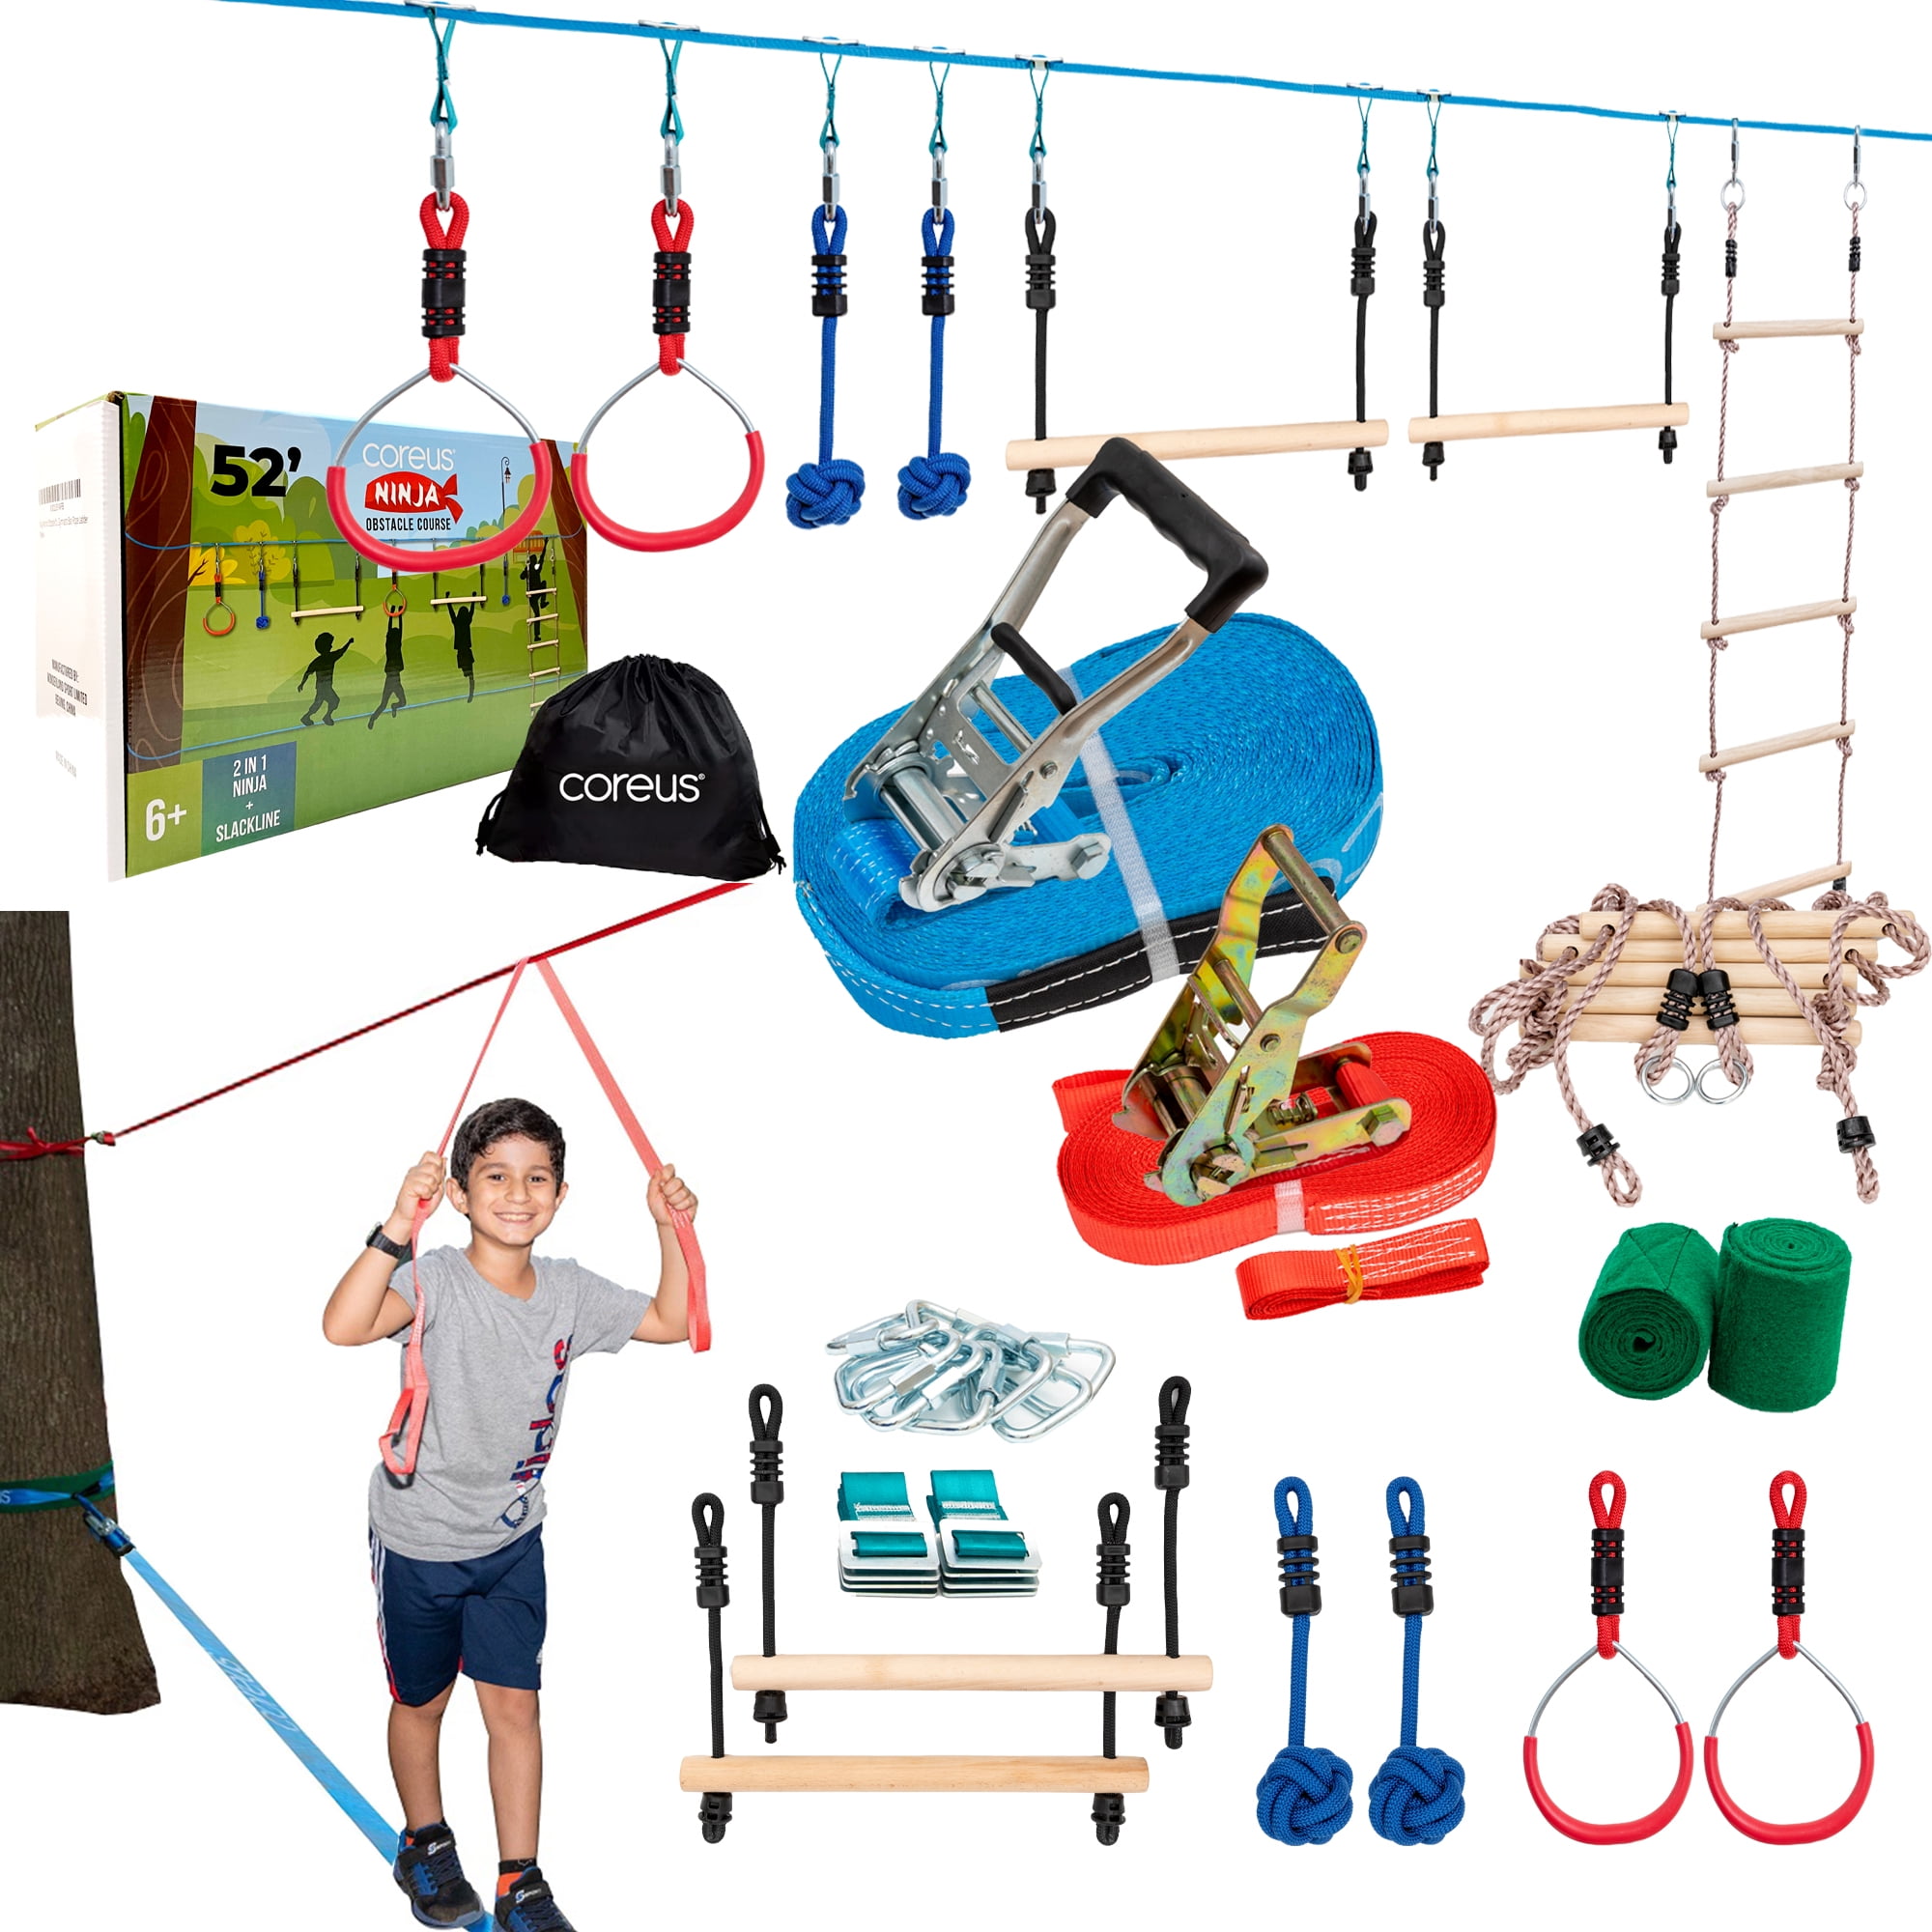 Slackline 12 Accessorie for sale online 49 Double Line Ninja Warrior Obstacle Course for Kids 